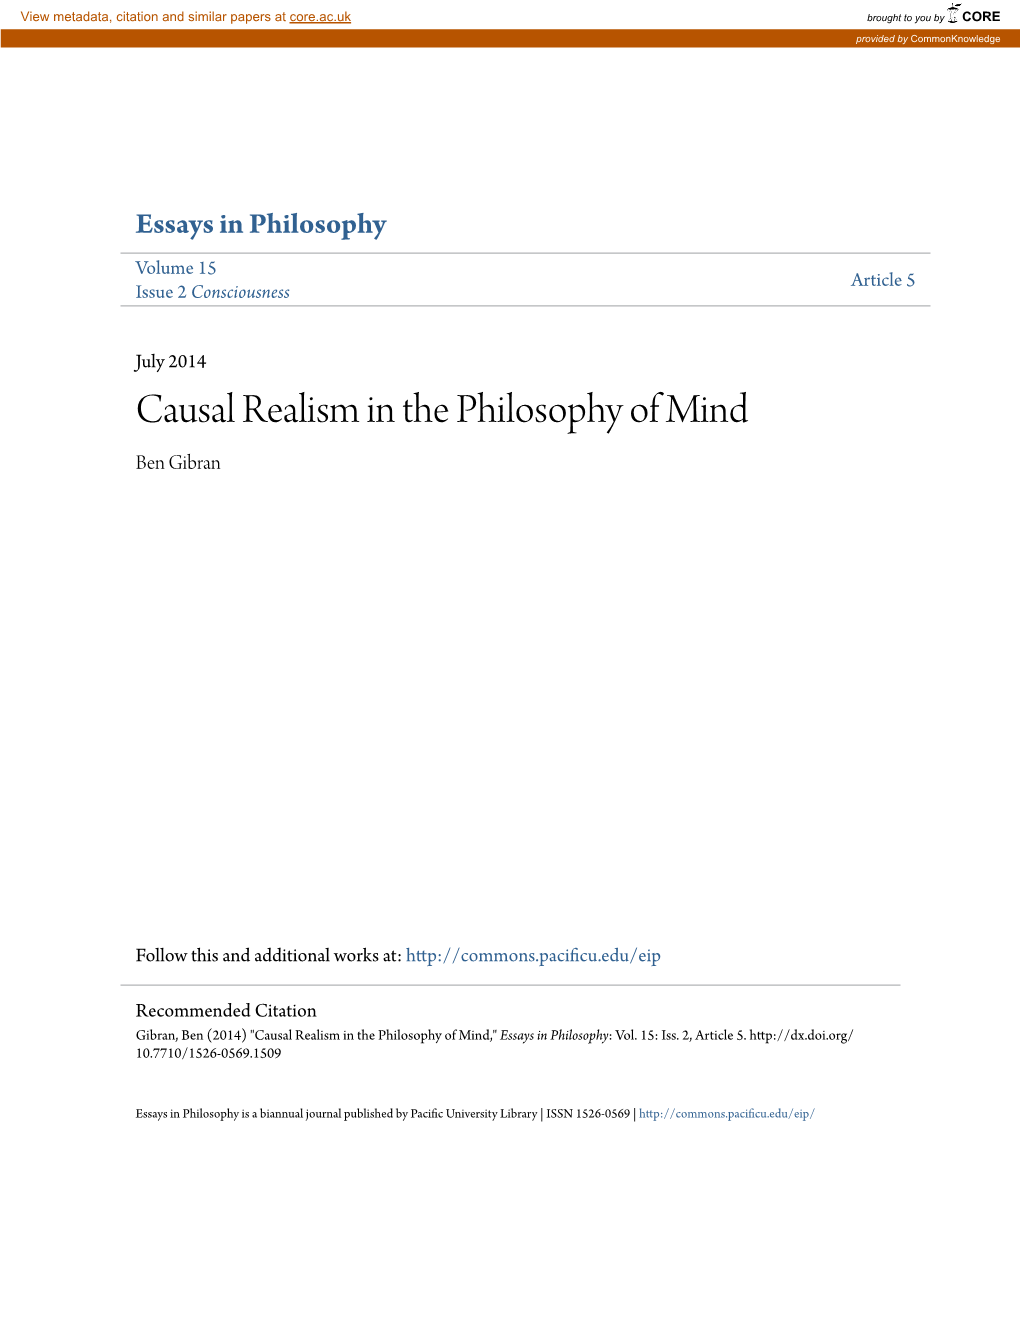 Causal Realism in the Philosophy of Mind Ben Gibran